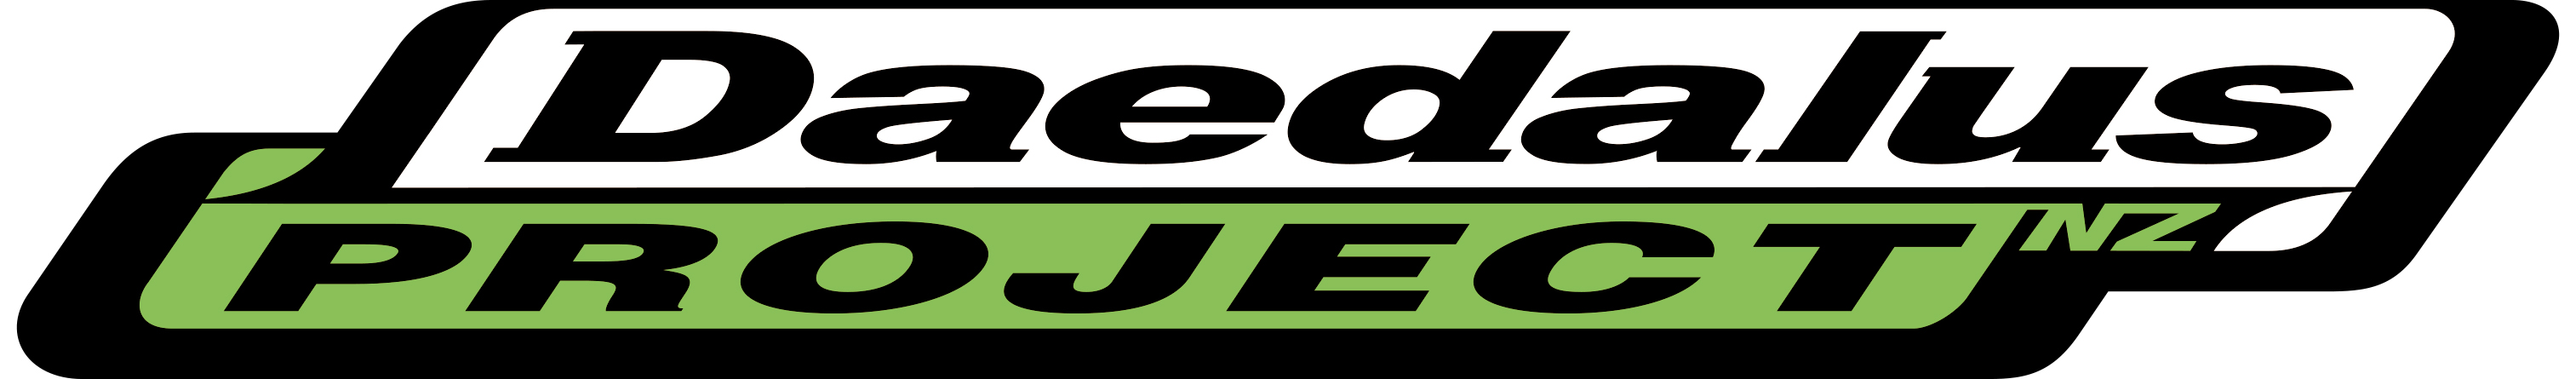 Daedalus logo_NEW copy